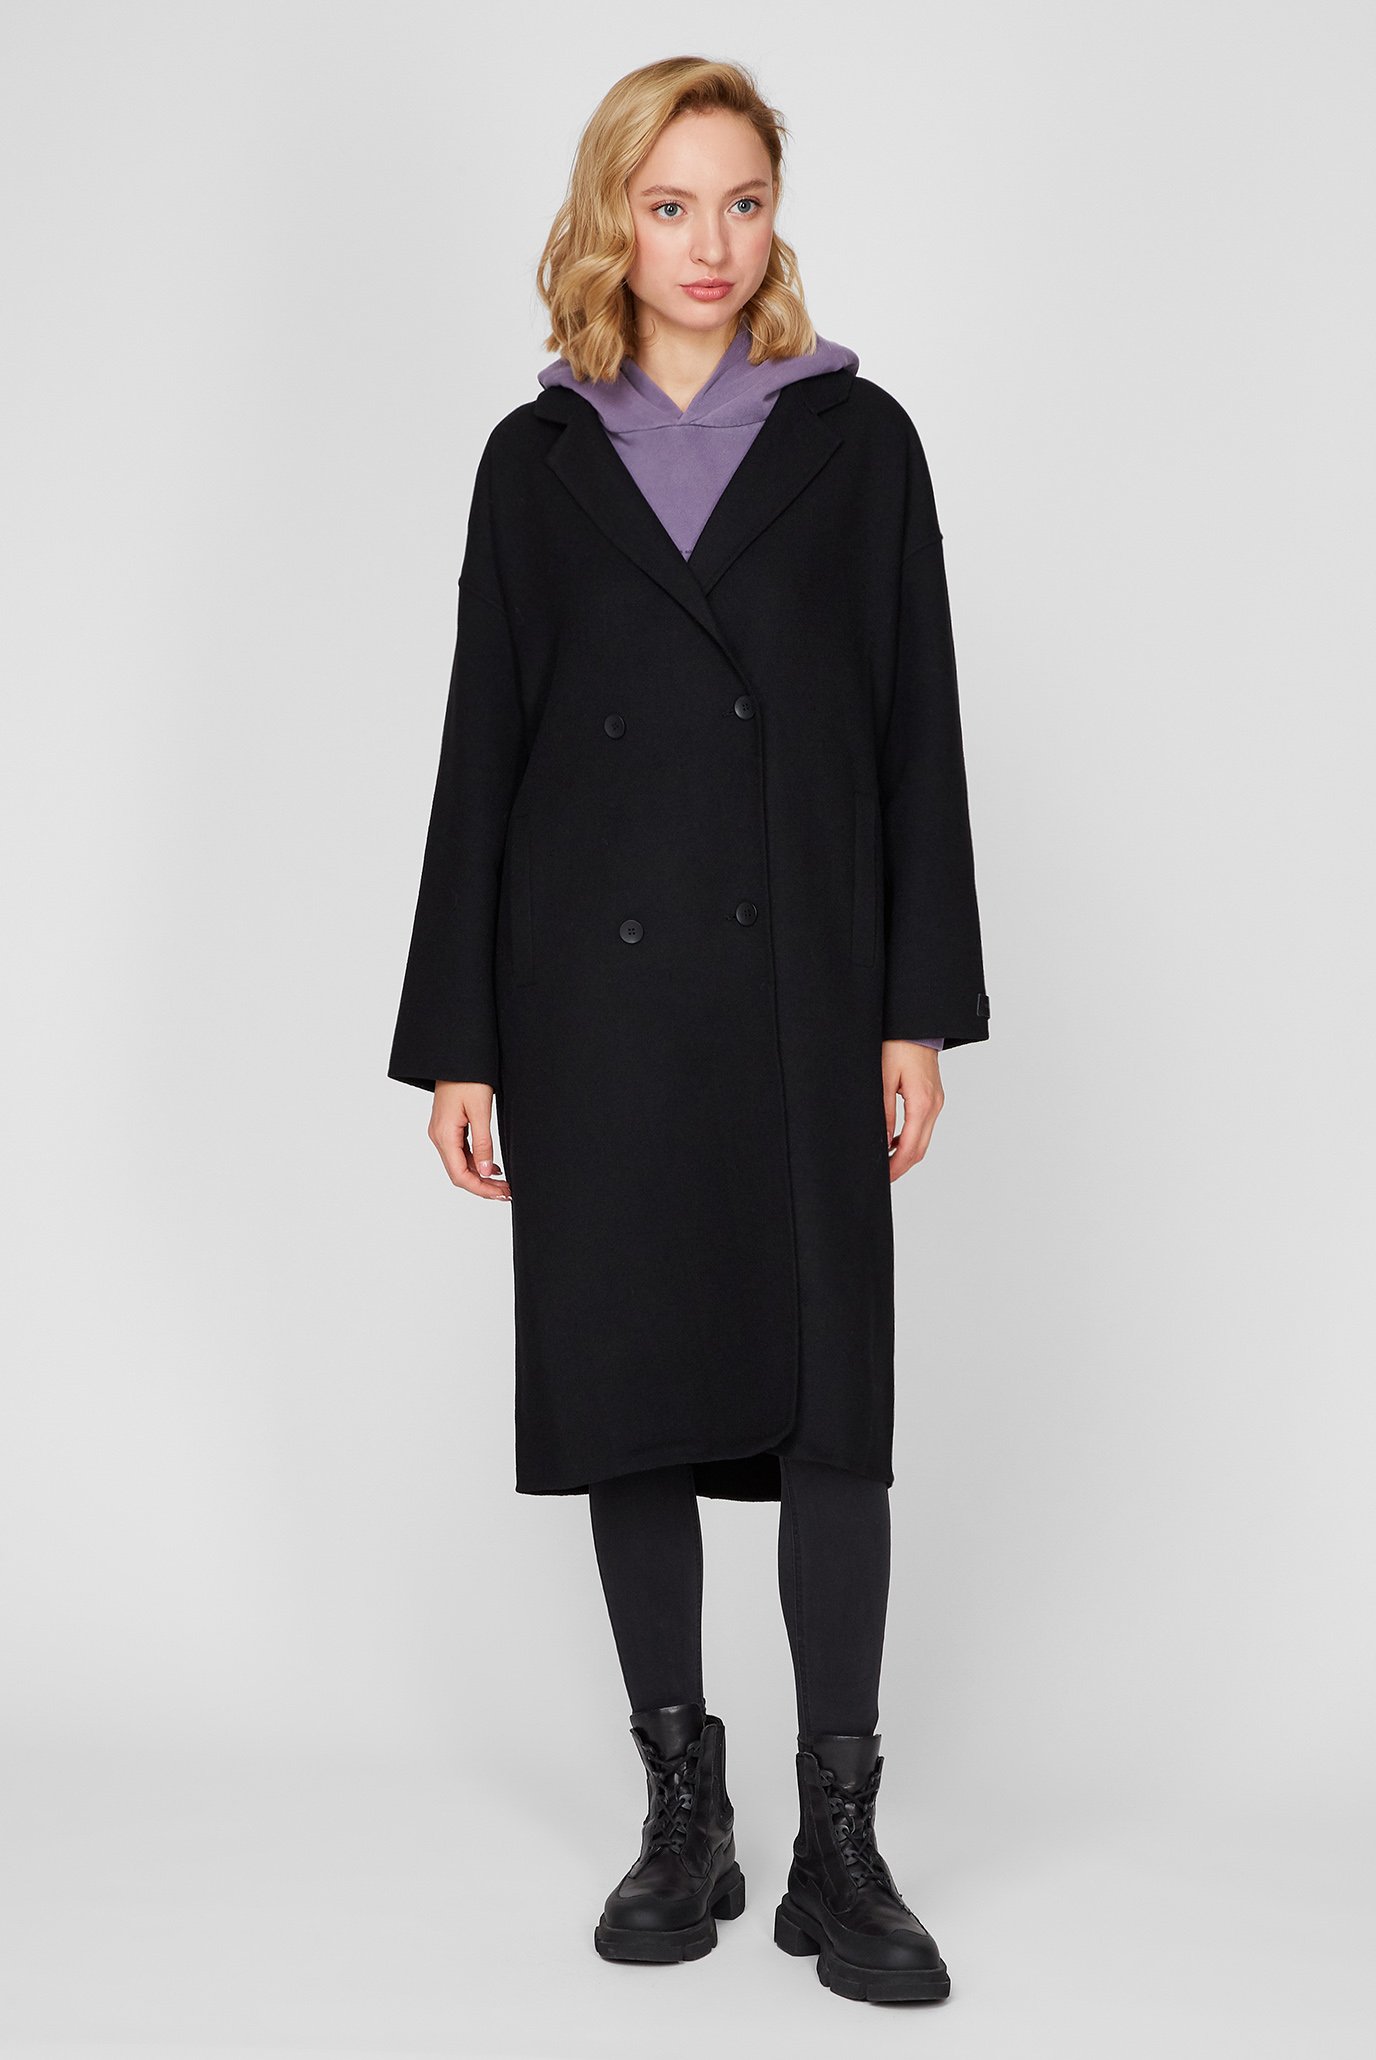 Жіноче чорне пальто Tiara 1